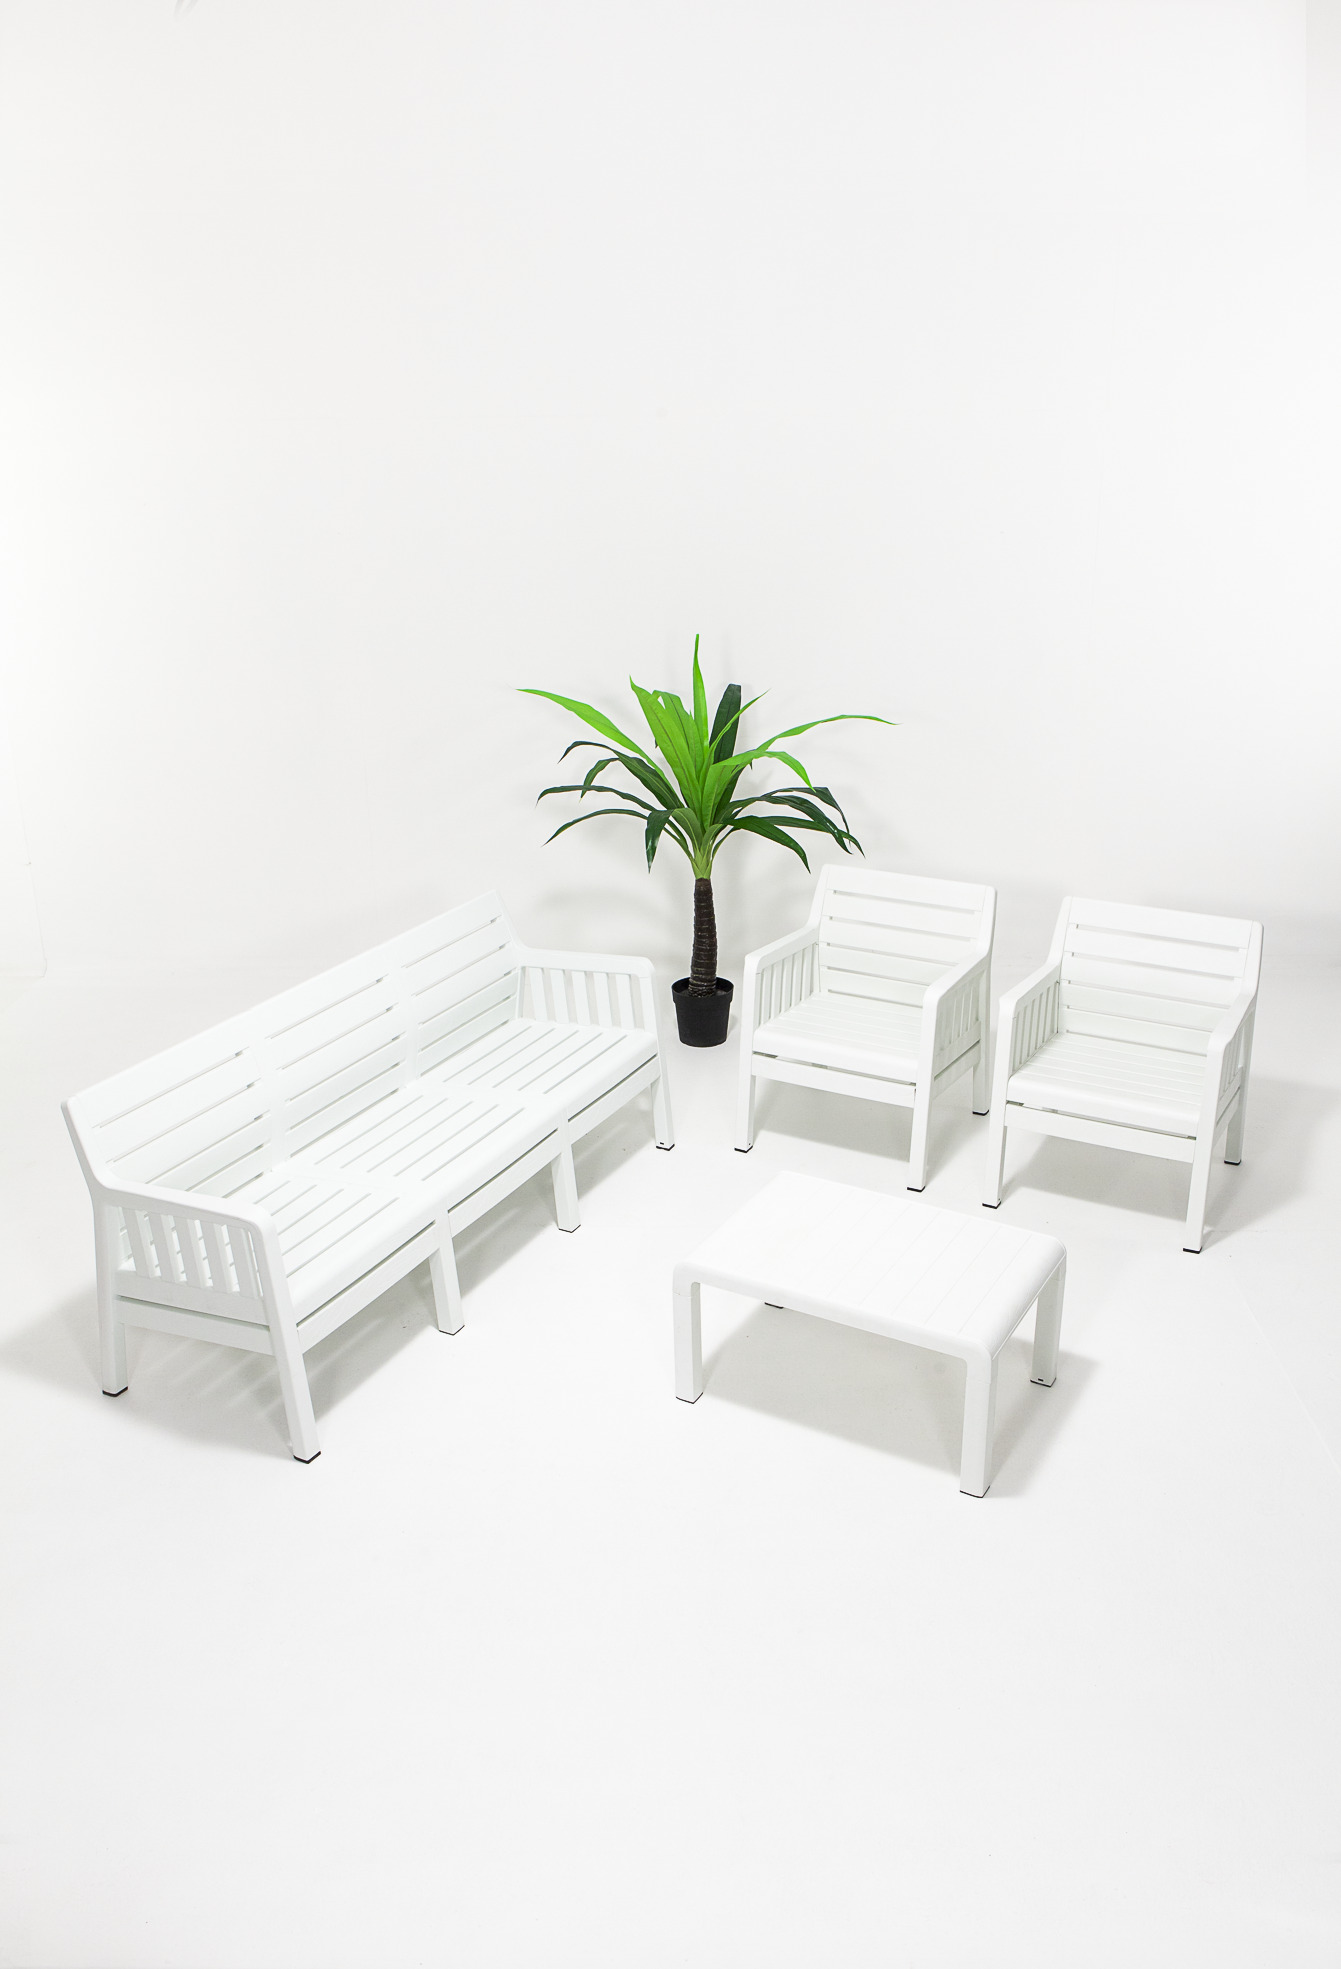 Lara CUSHION / 3 1 1 S Garden Set Balcony - Garden - Terrace Furniture / White